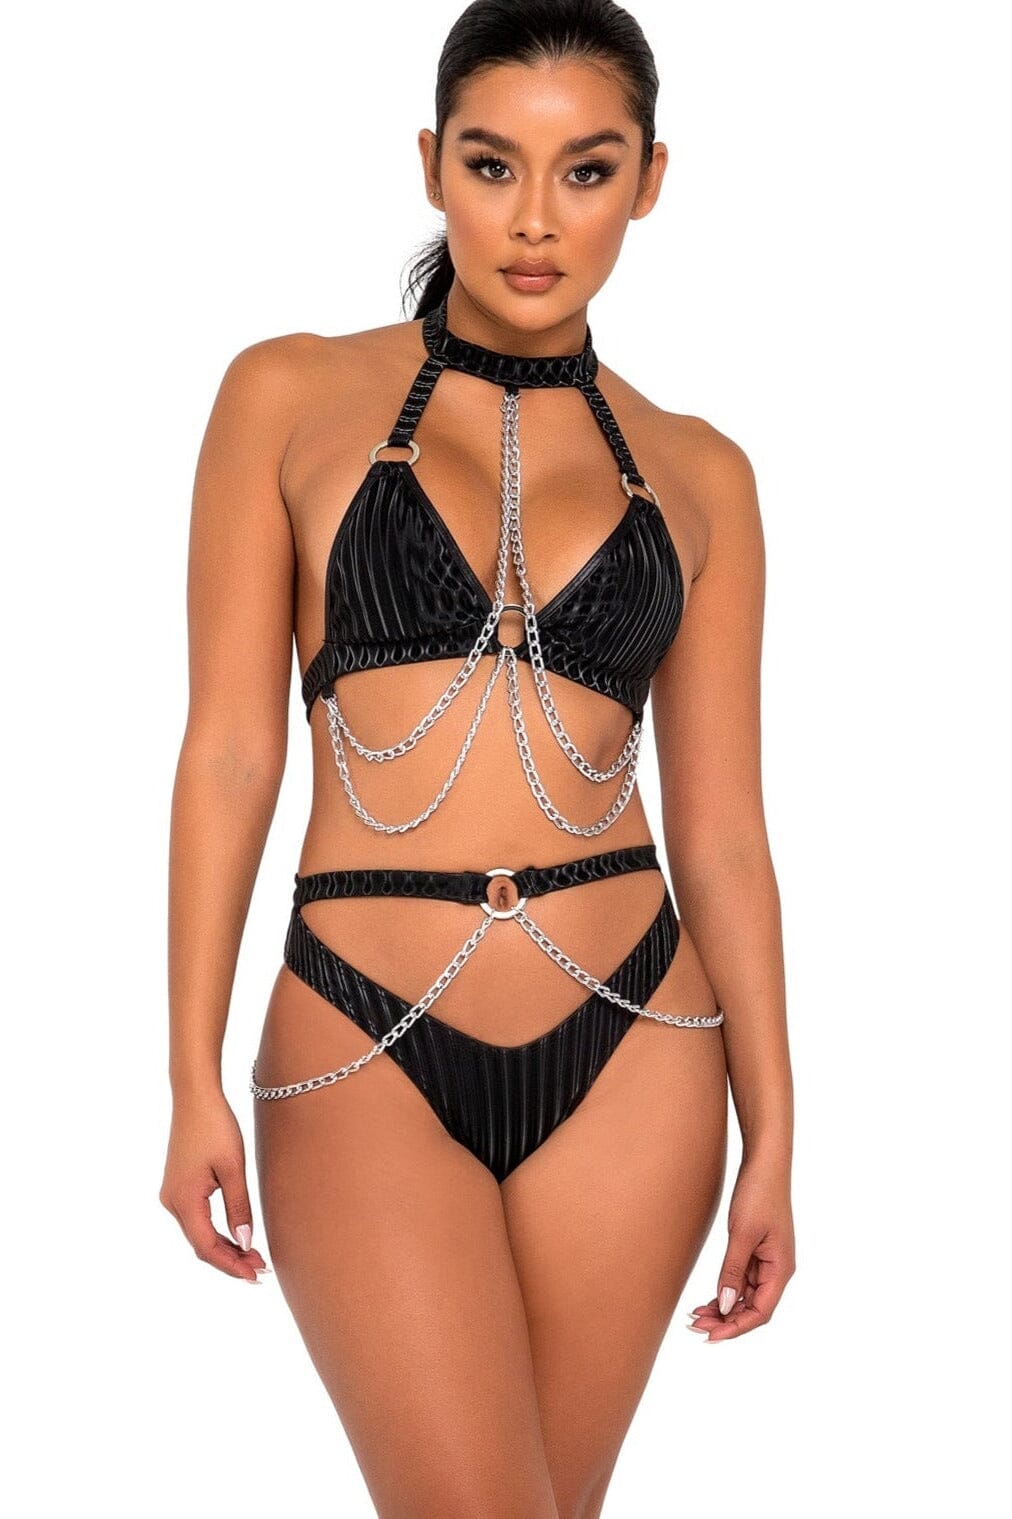 Bikini Top with Ring & Chain Detail-Halter Tops-Roma Dancewear-Black-L-SEXYSHOES.COM